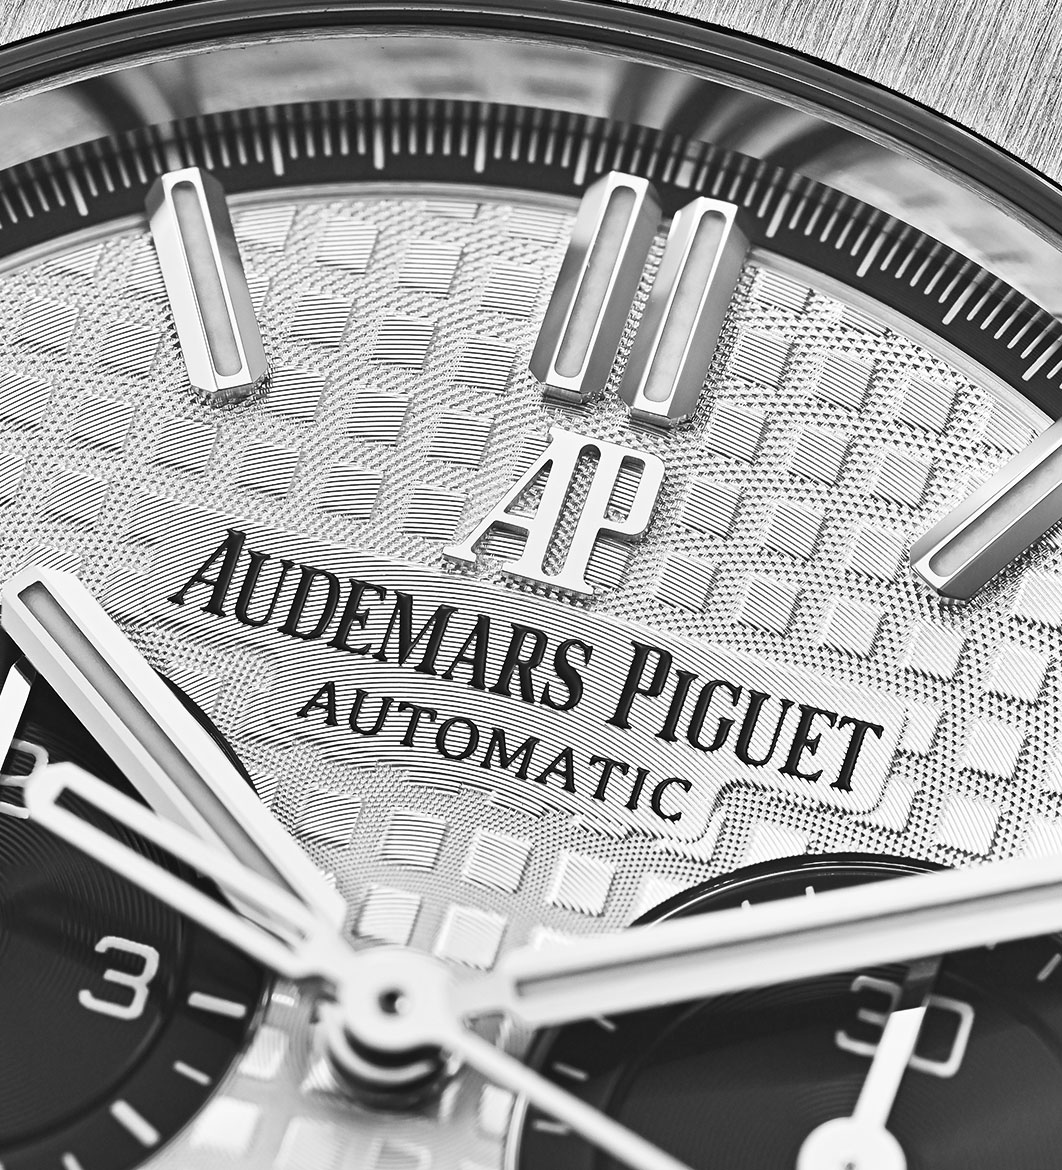 How to Spot a Fake Audemars Piguet (DON'T Make A Mistake!) - Exquisite  Timepieces